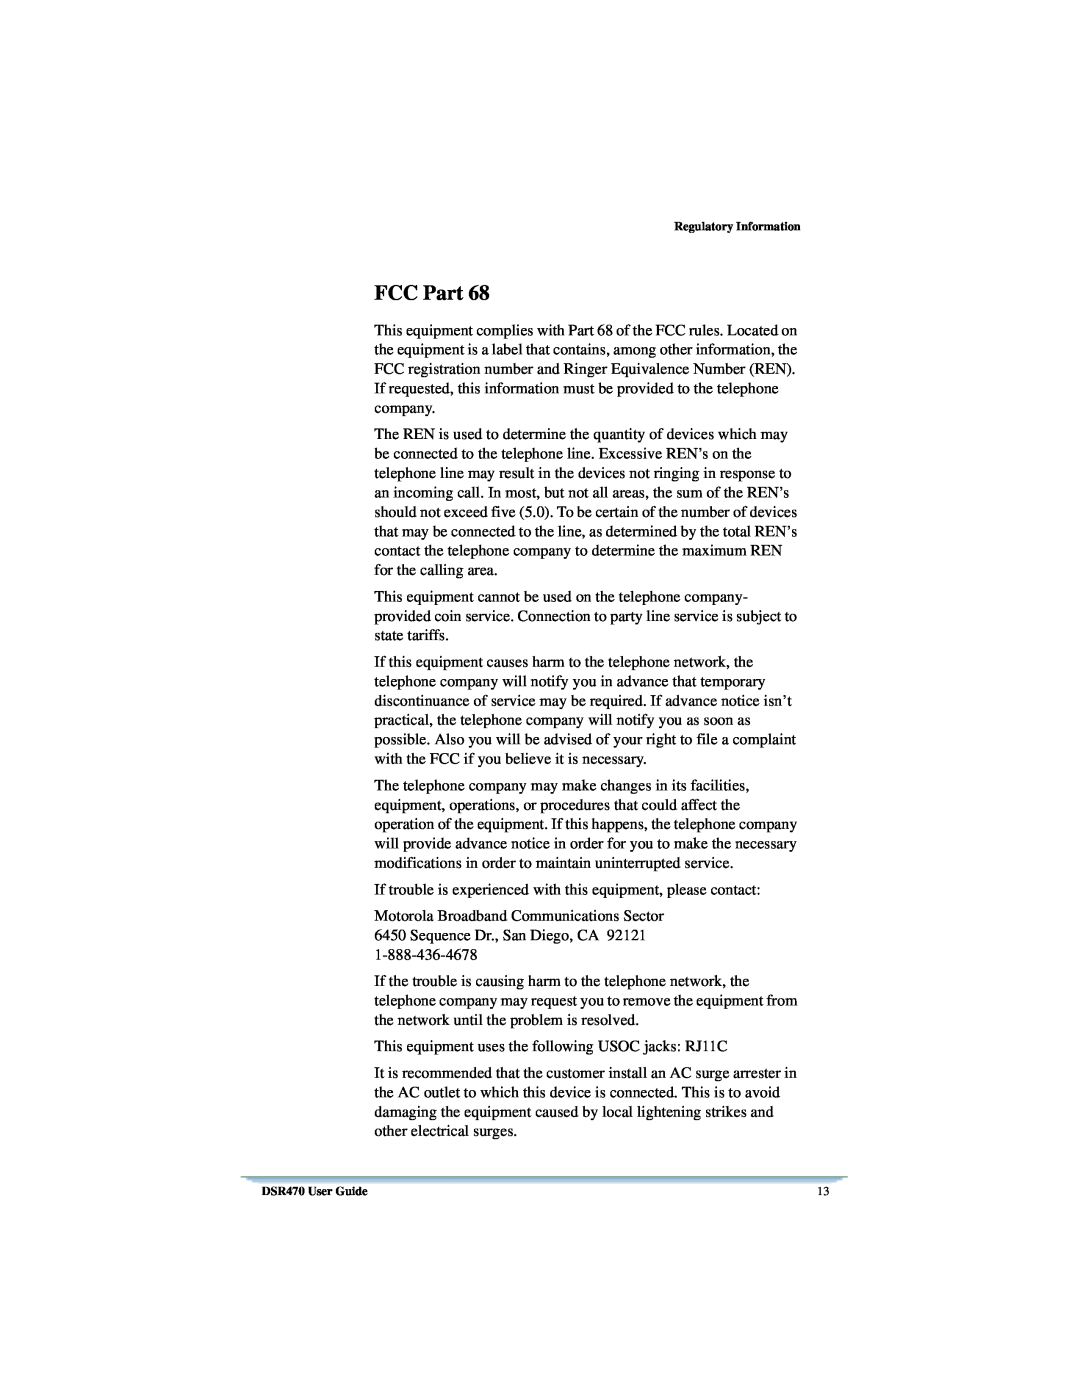 Univex manual FCC Part, Regulatory Information, DSR470 User Guide 